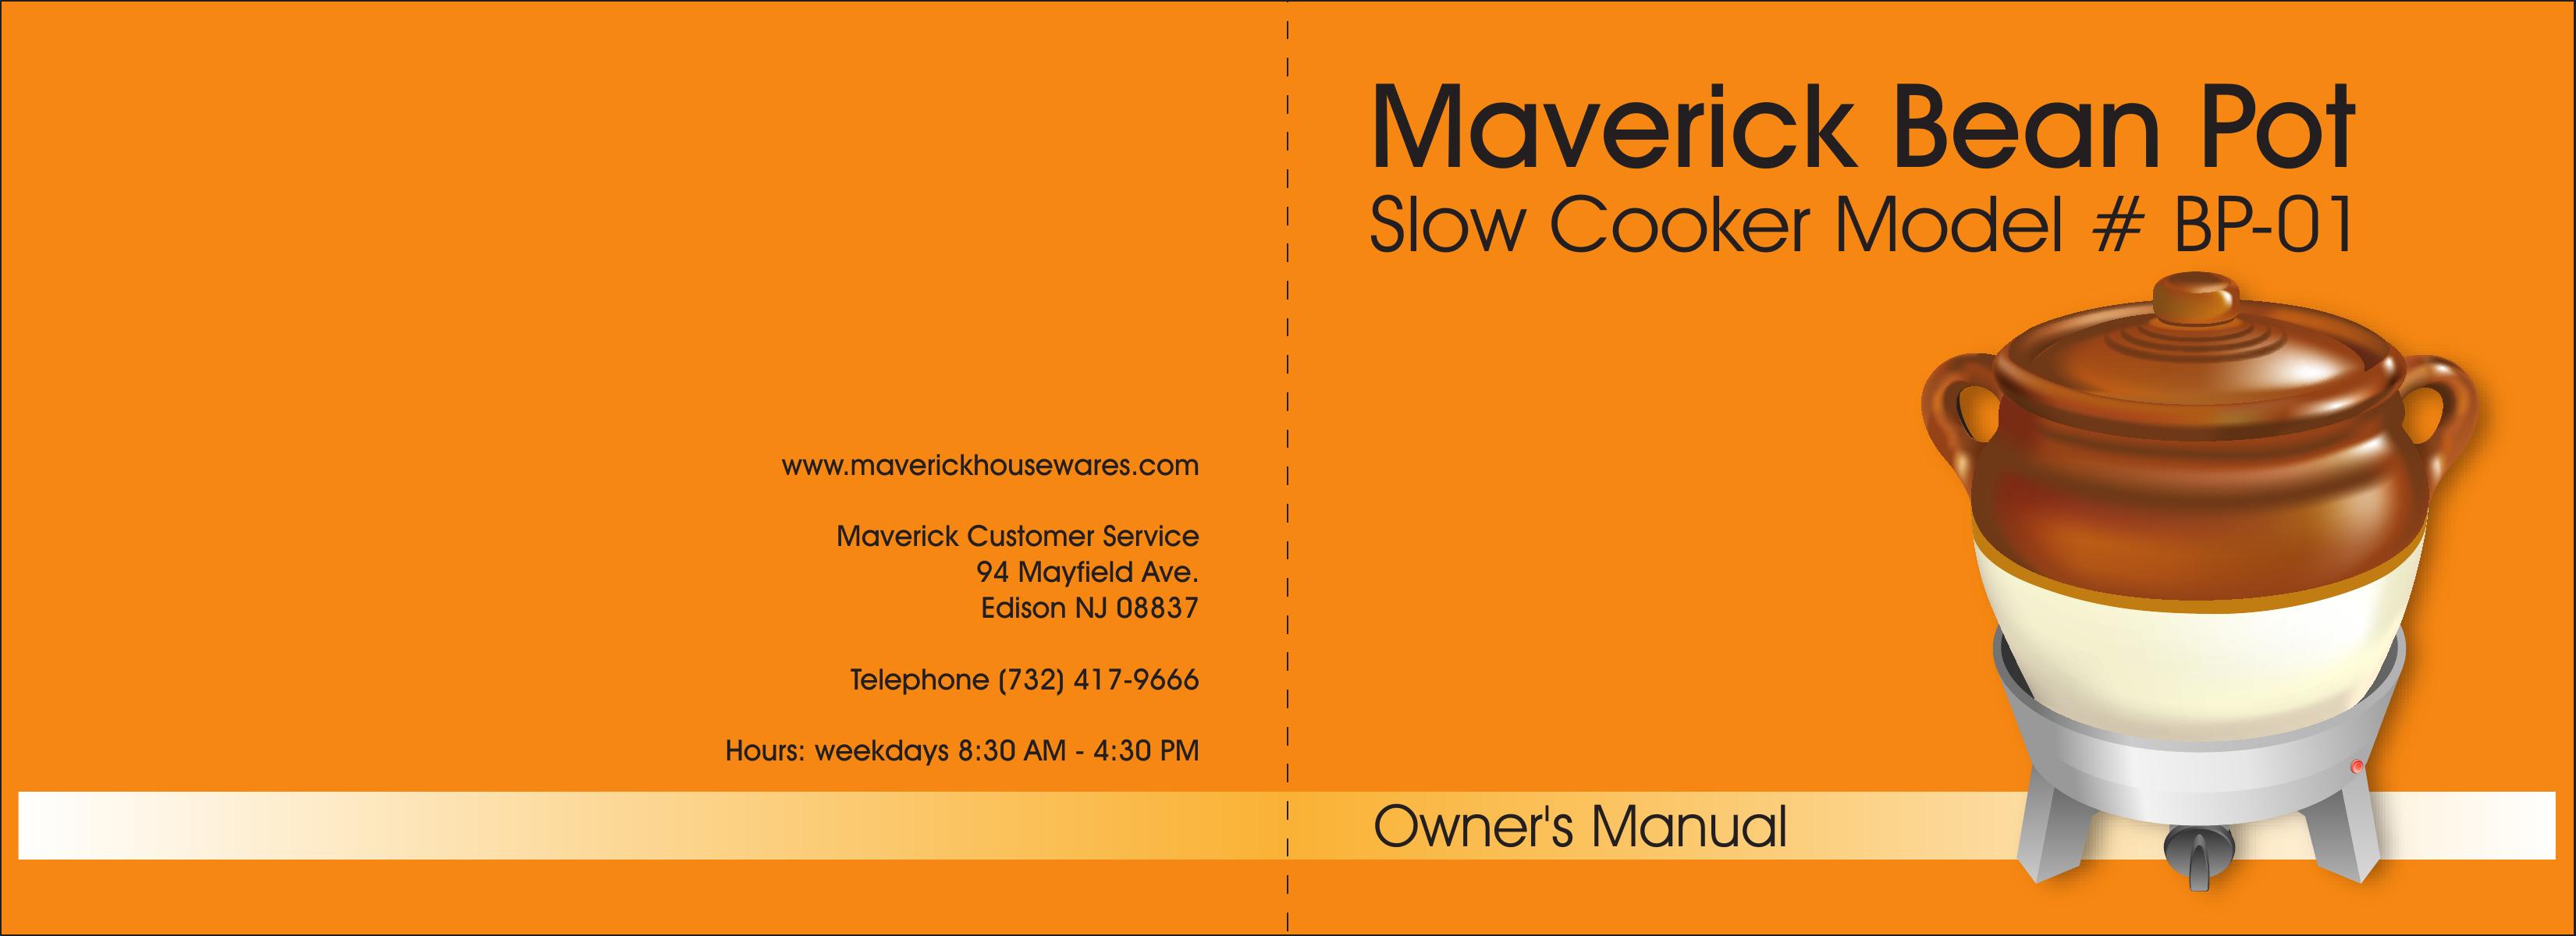 Maverick Ventures BP-01 Slow Cooker User Manual